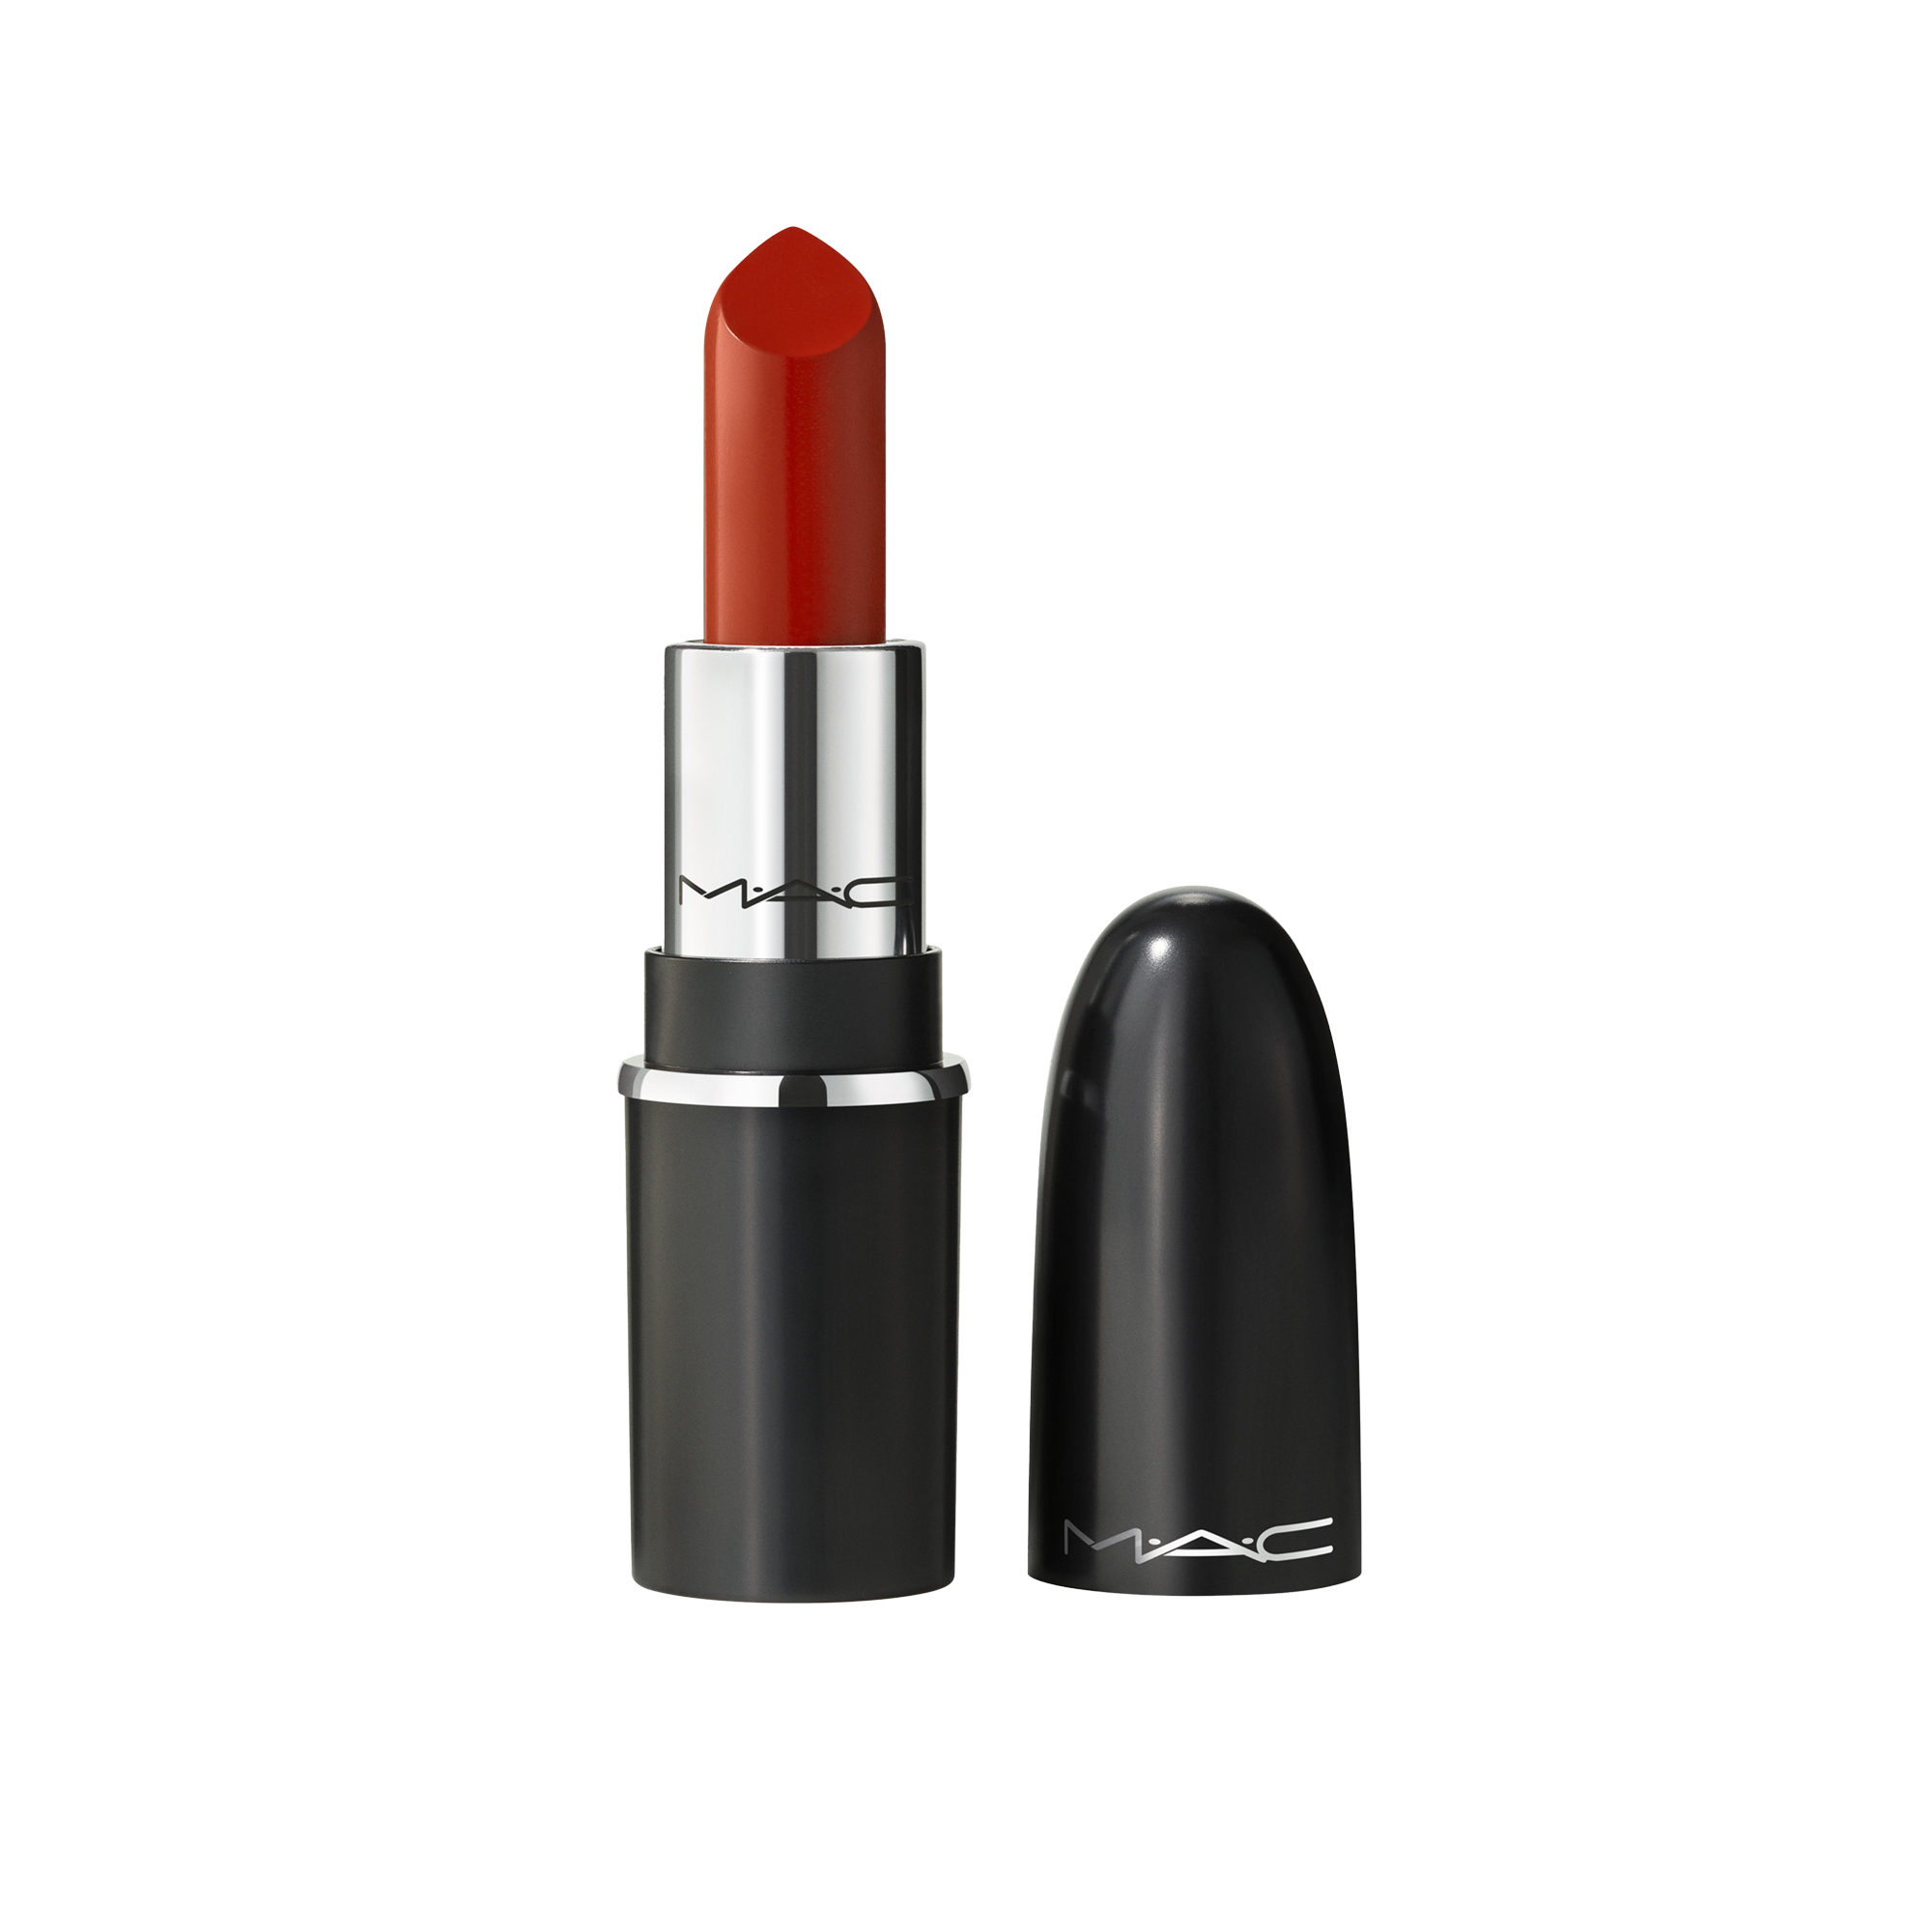 mac ximal silky matte mini lipstick 2g (various shades) - chili